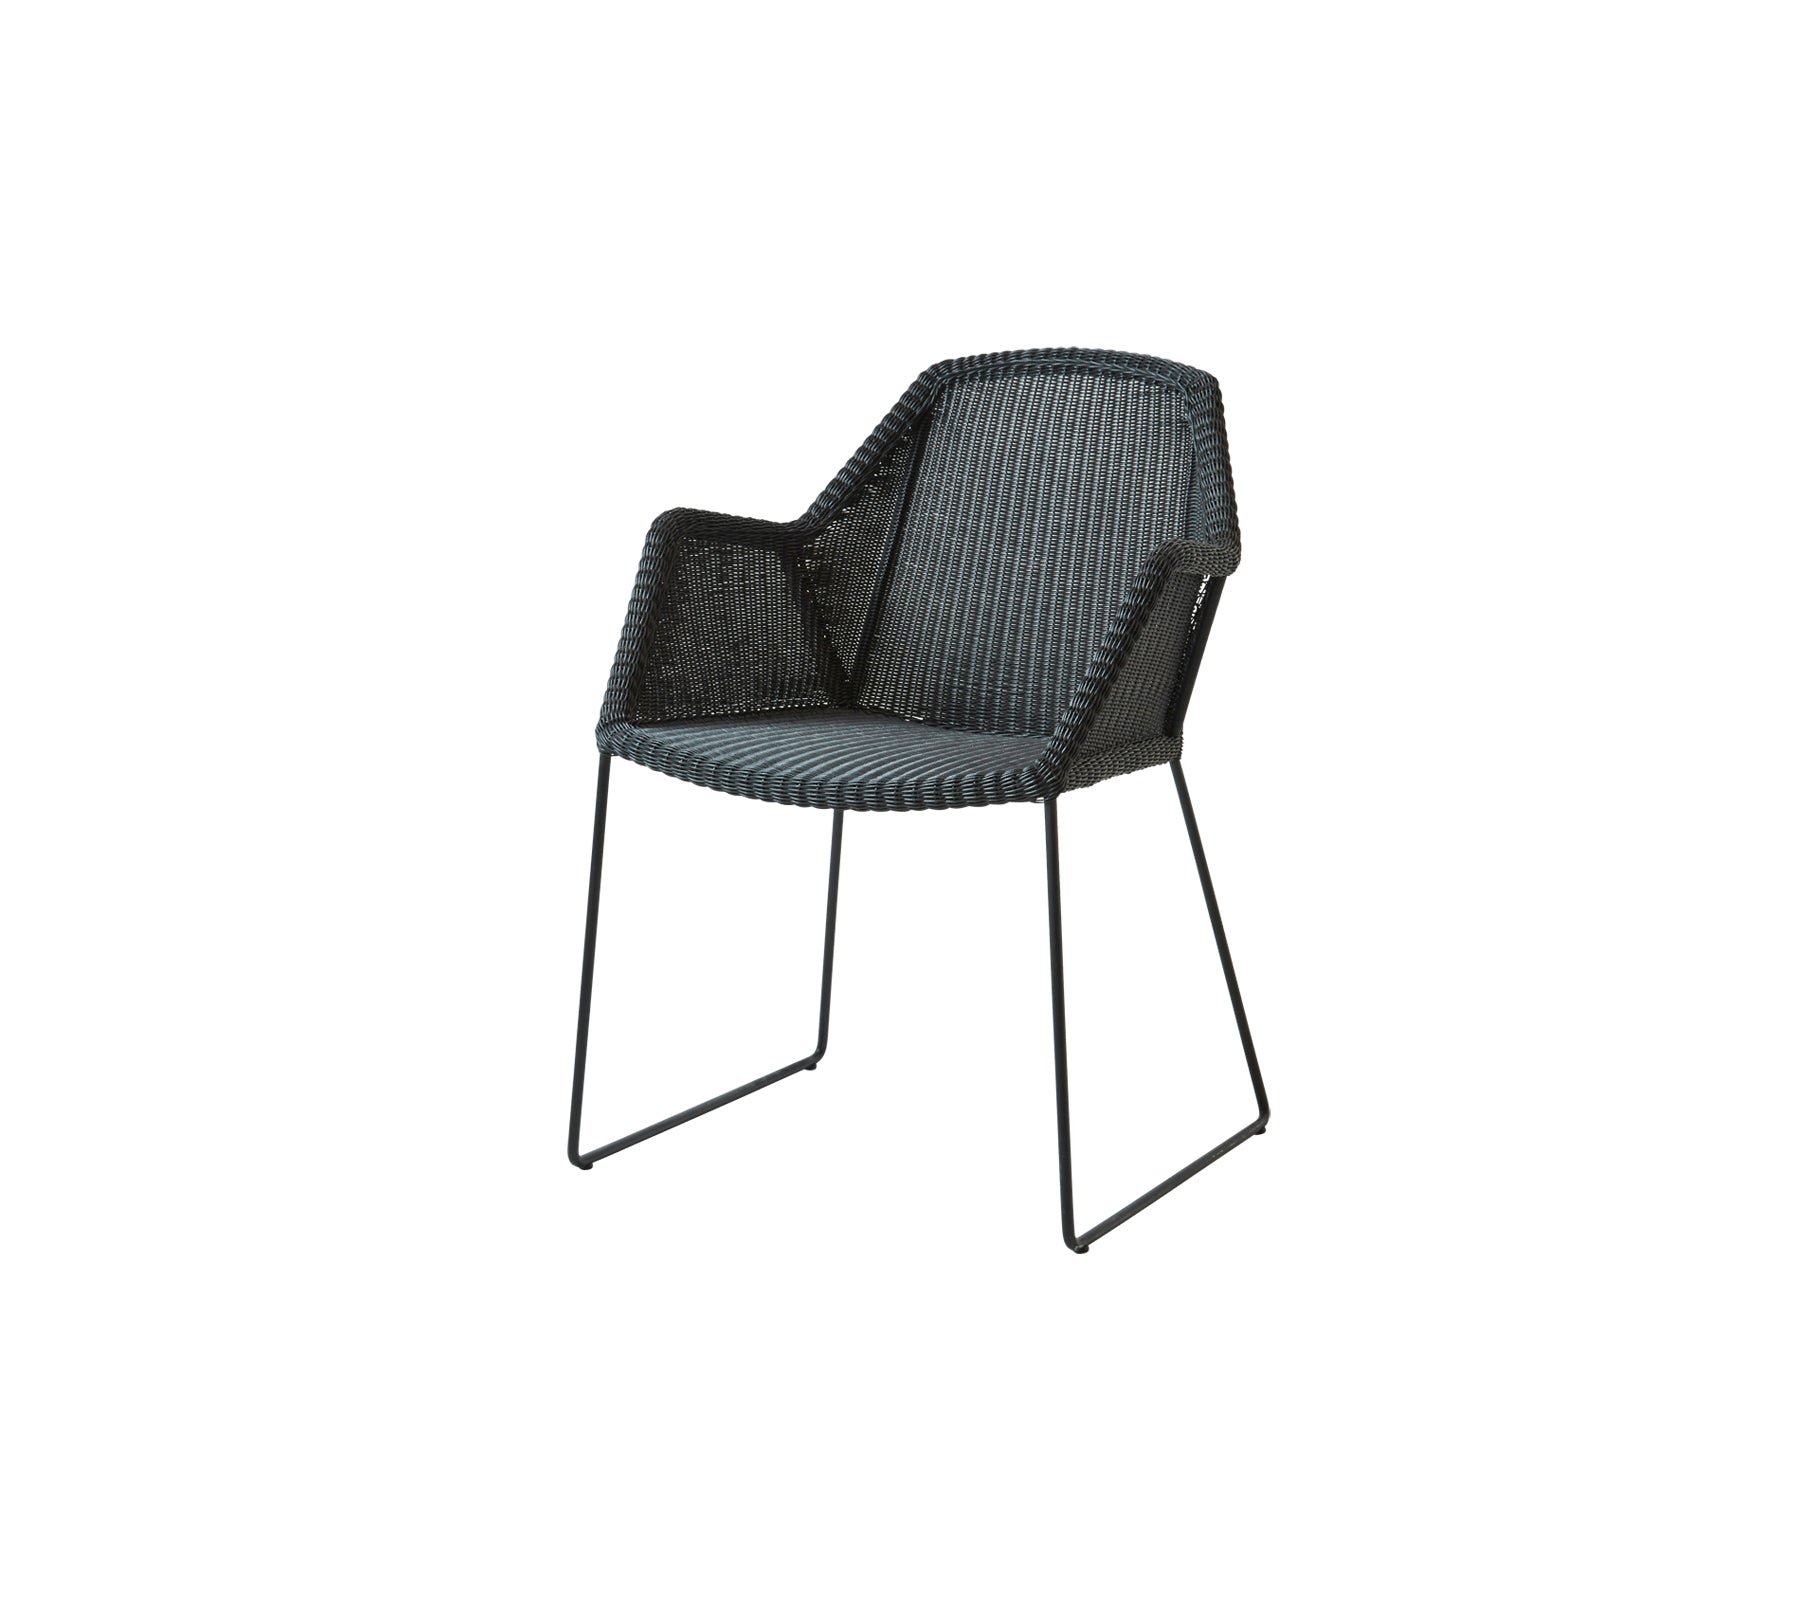 Cane-line Breeze Chair 5467LS